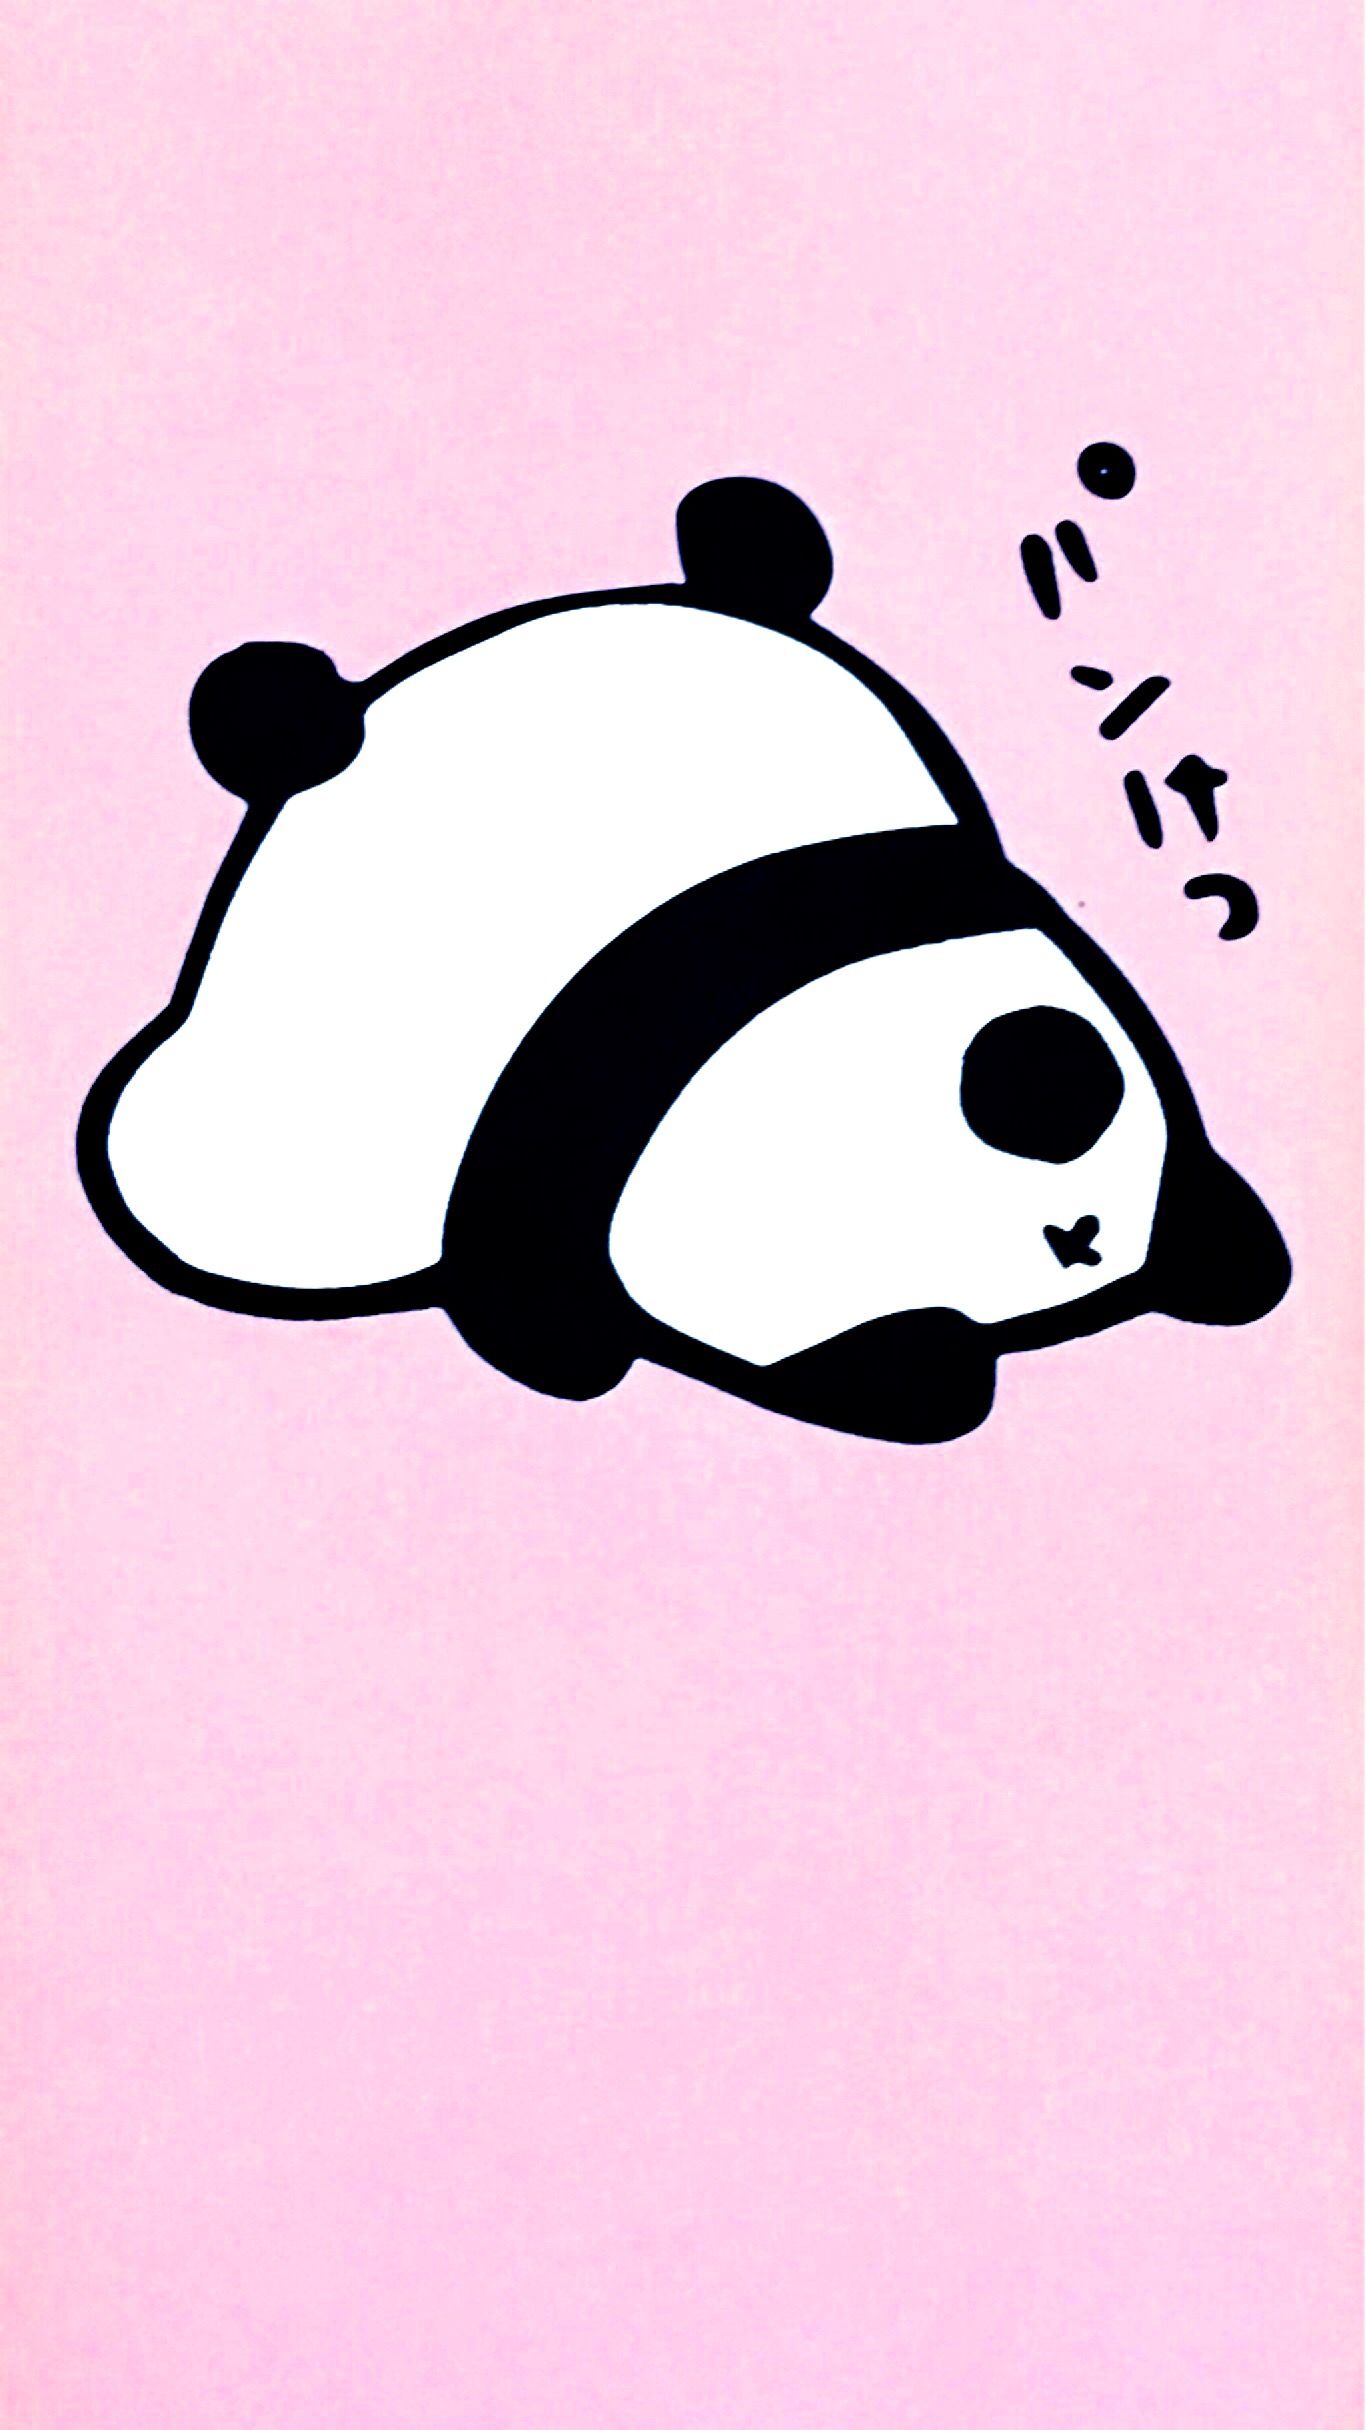 Gambar Panda Lucu Warna Pink